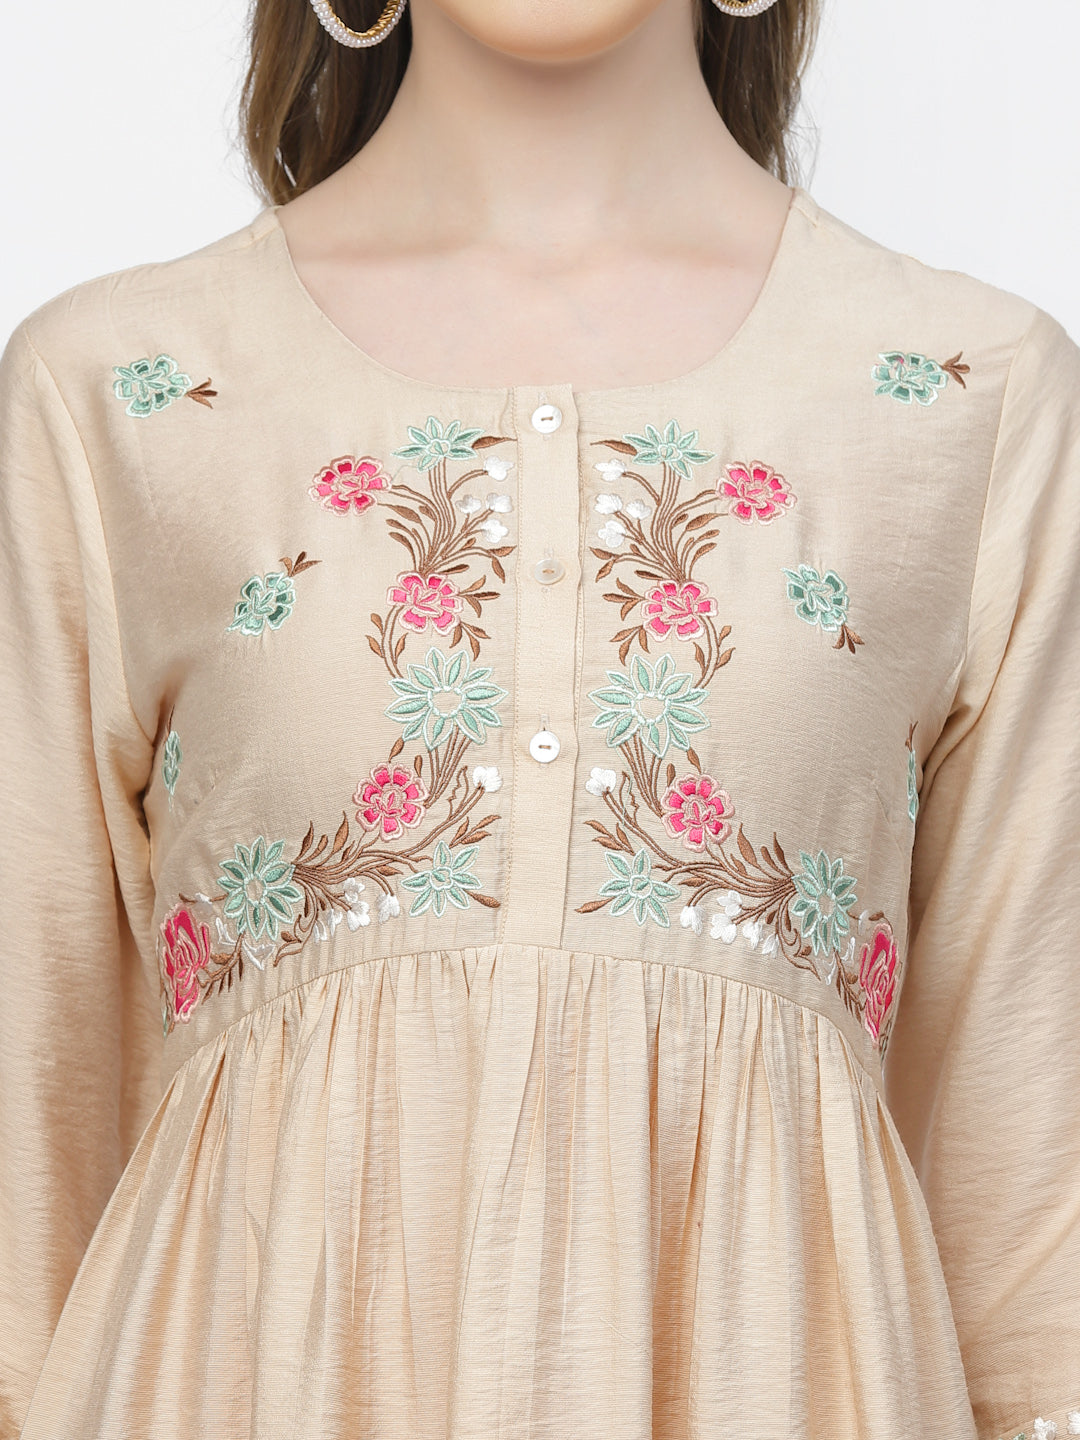 Cream Embroidered Pleated Beige Dress - ARH1507